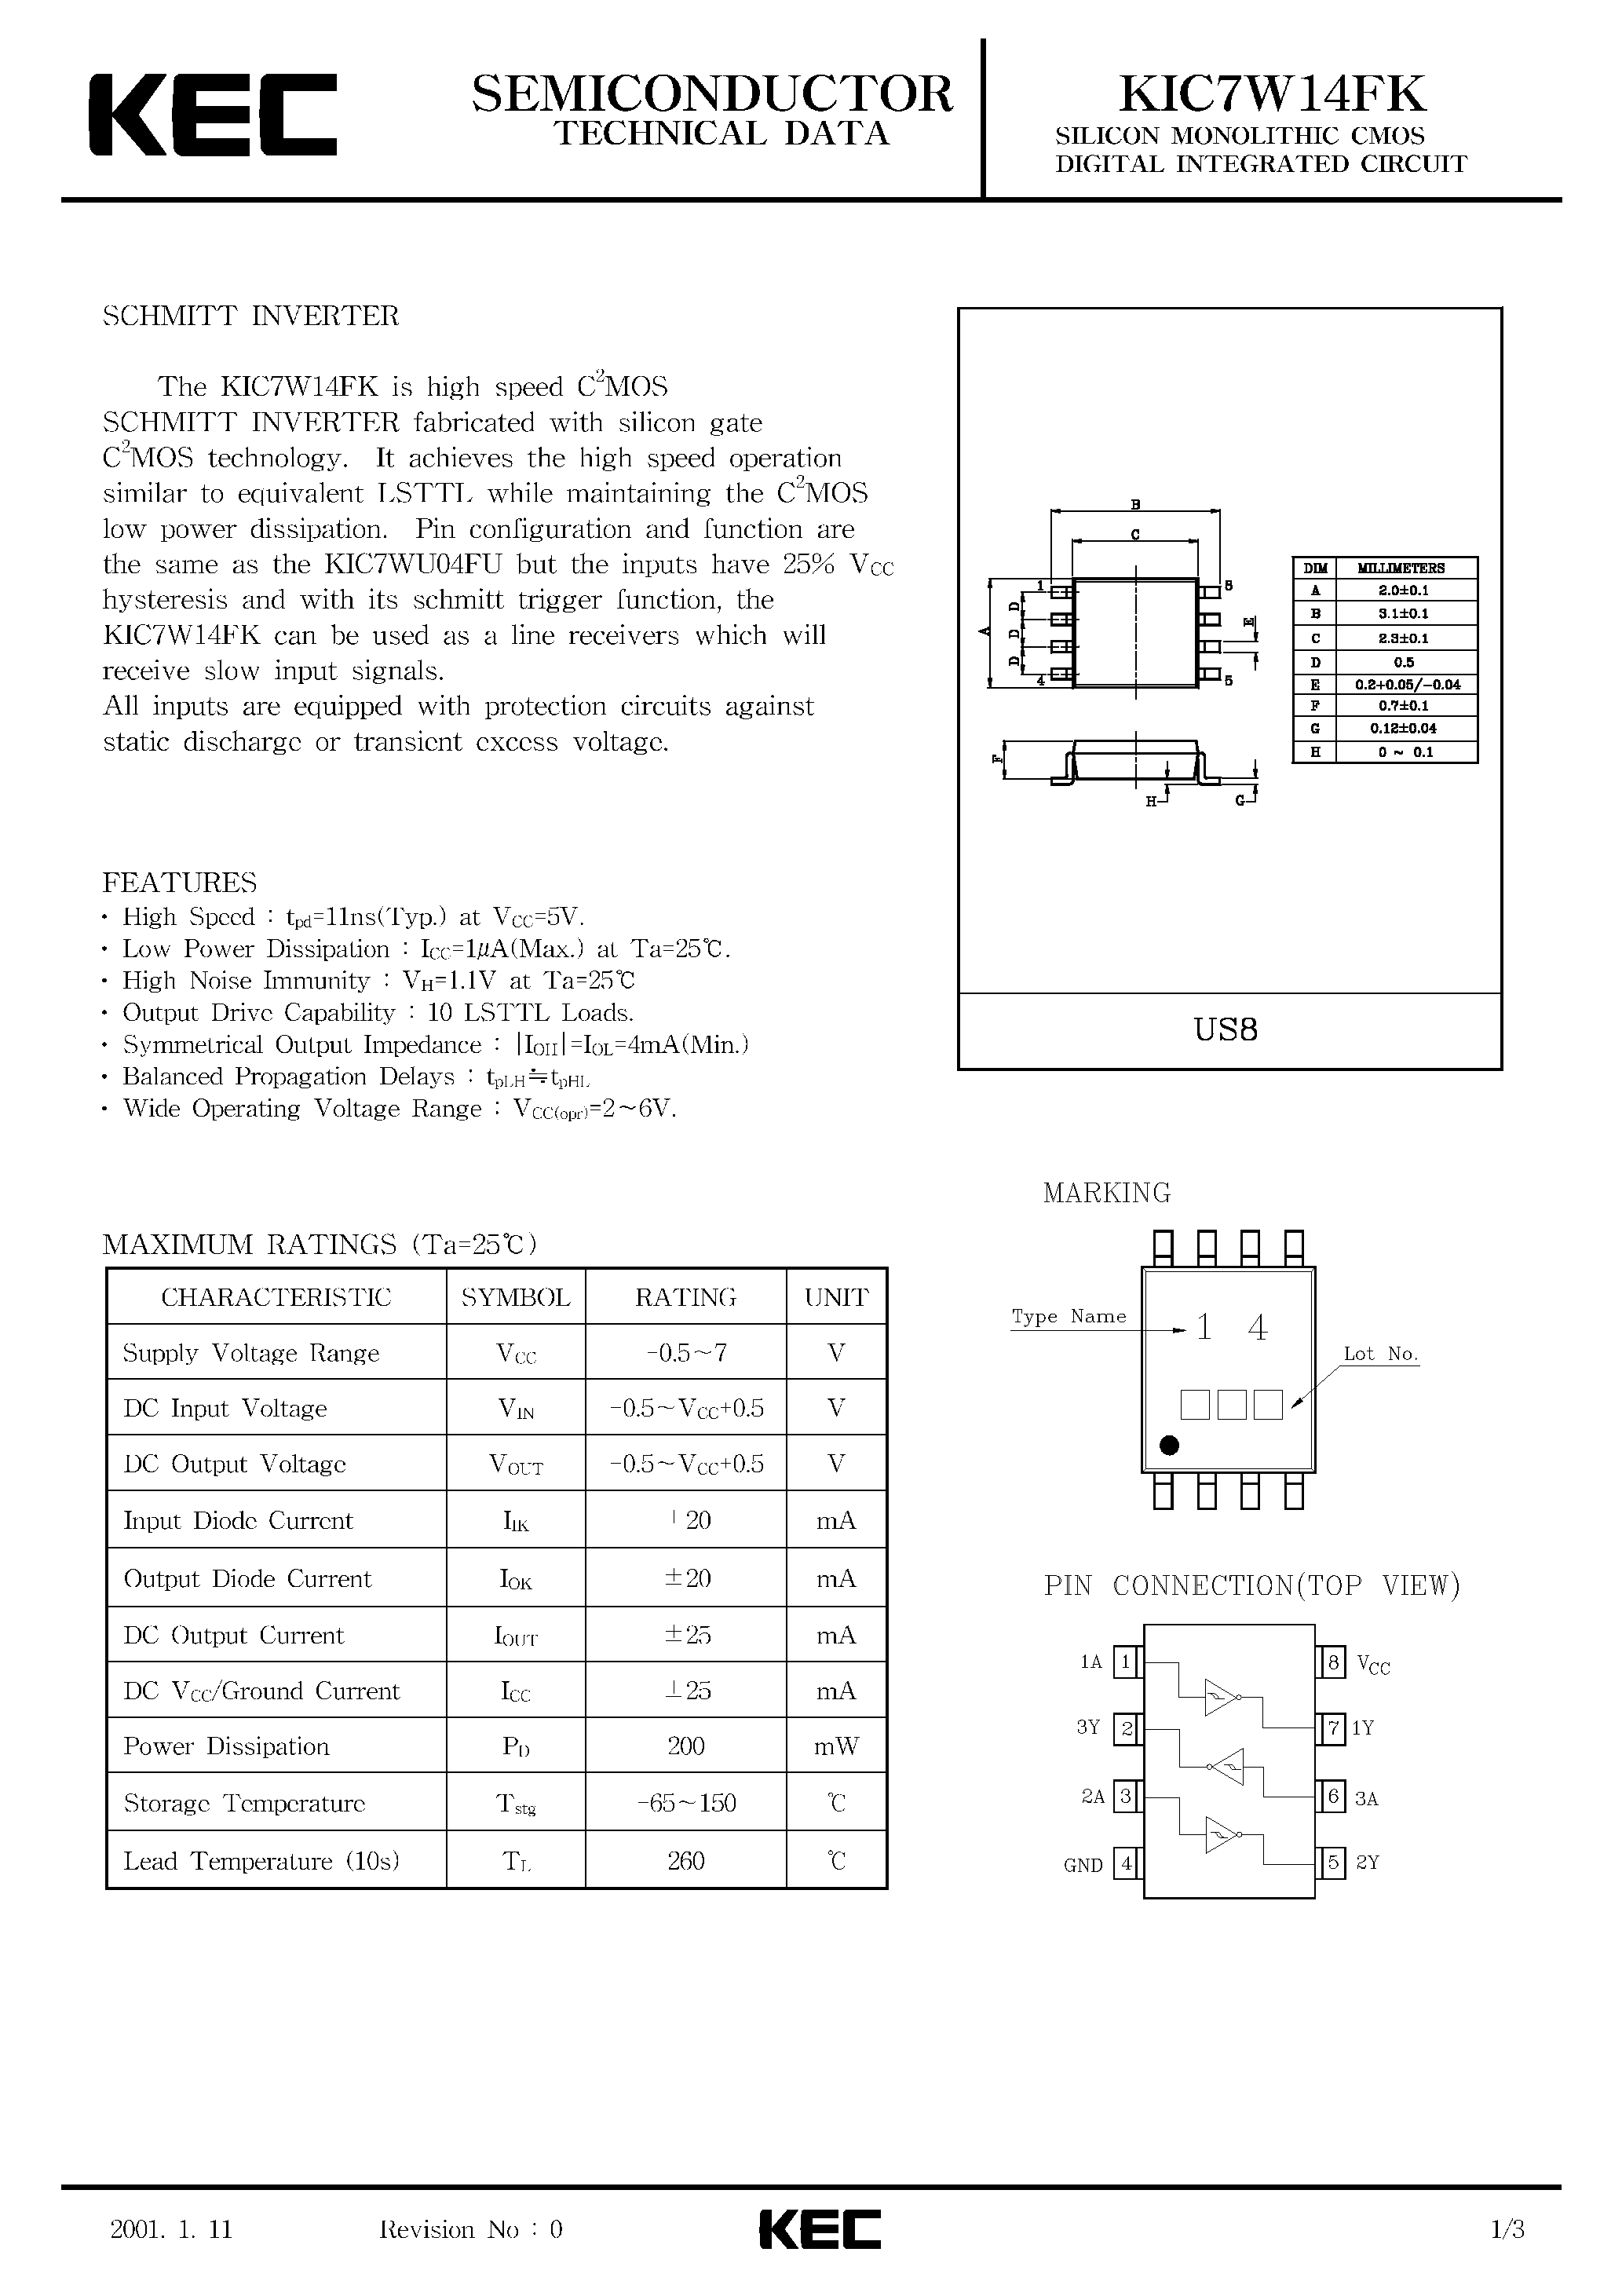 Даташит KIC714FK-SILICON MONOLITHIC CMOS DIGITAL INTEGRATED CIRCUIT (SCHMITT INVERTER) страница 1